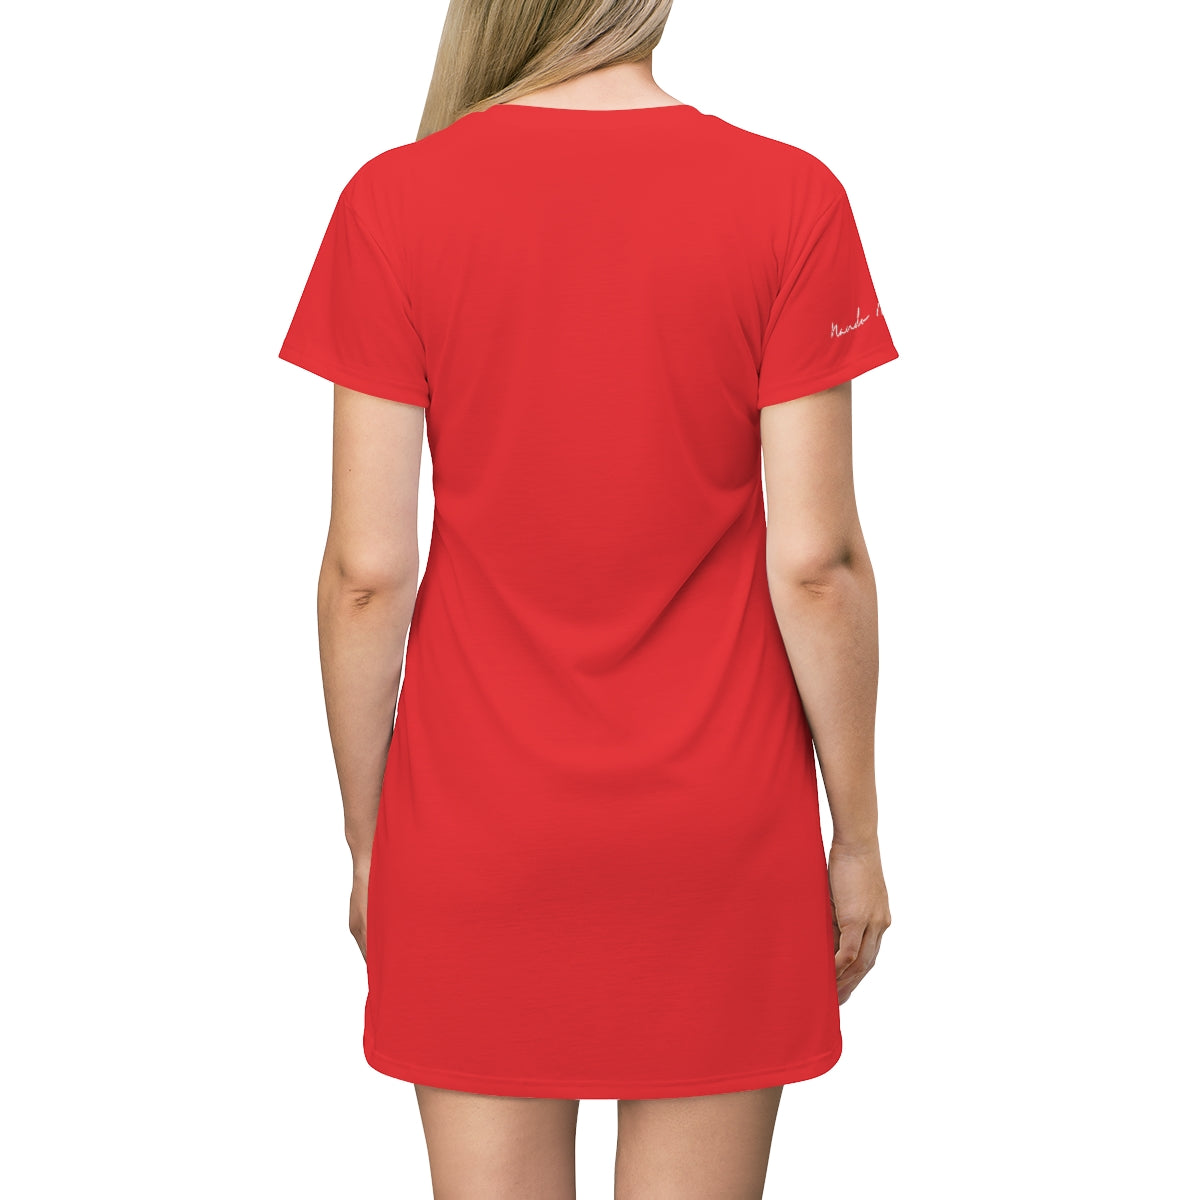 Shirtdress, Red Floral Motive